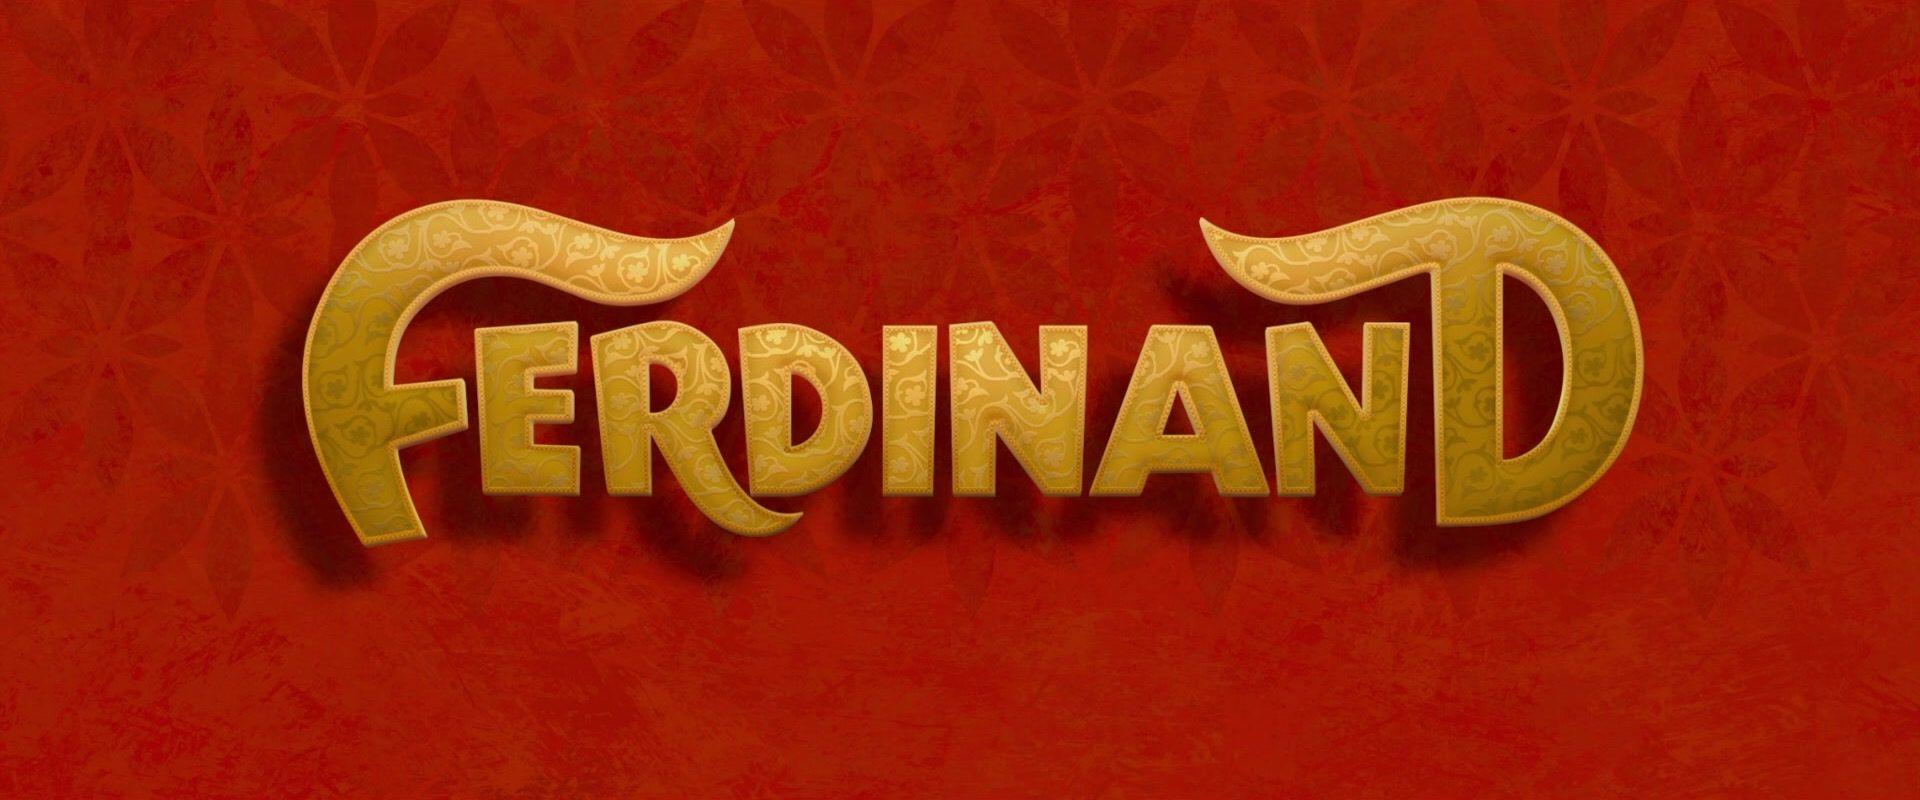 Ferdinand Logo - Ferdinand | Blue Sky Studios Wiki | FANDOM powered by Wikia